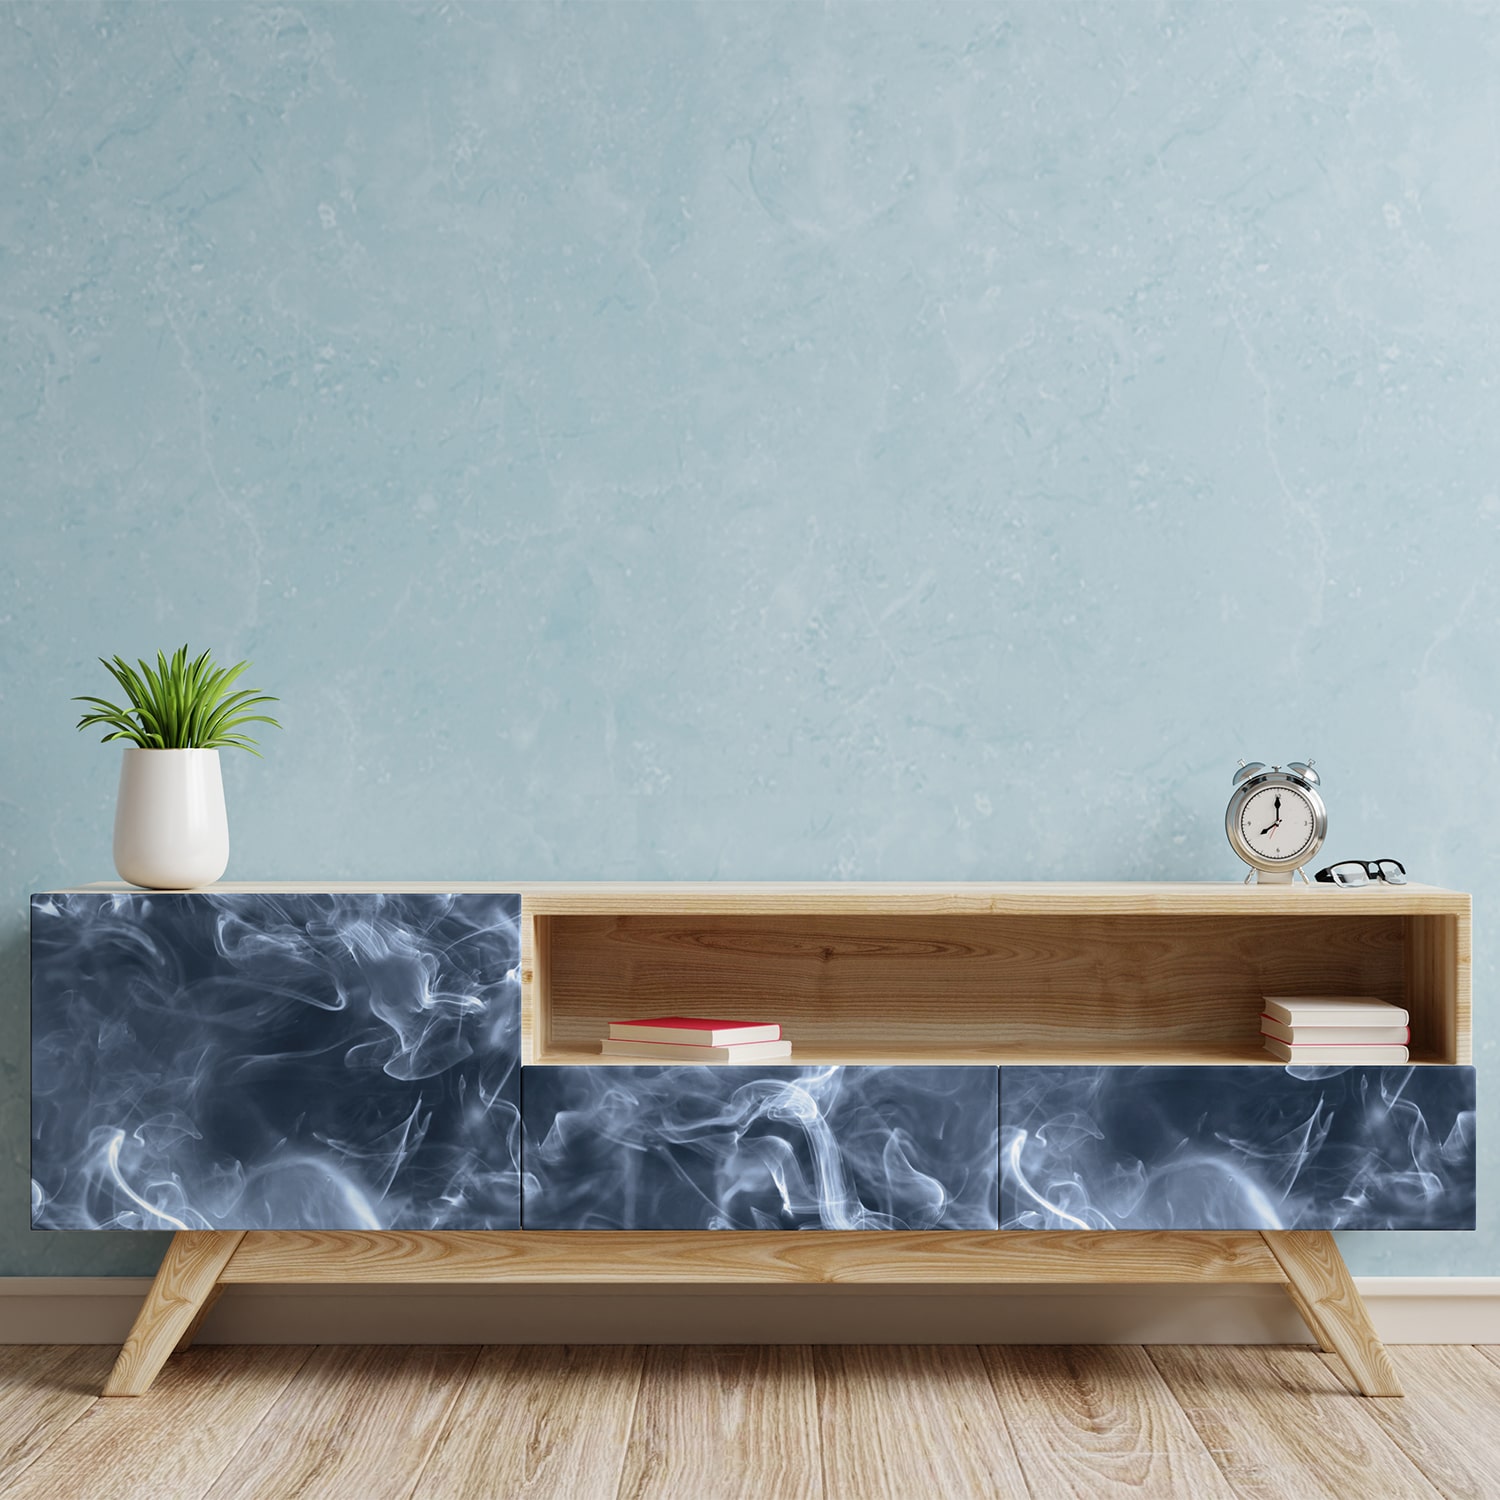 PP63-meuble-papier-peint-adhesif-decoratif-revetement-vinyle-motifs-smoke-fumer-renovation-meuble-mur-min